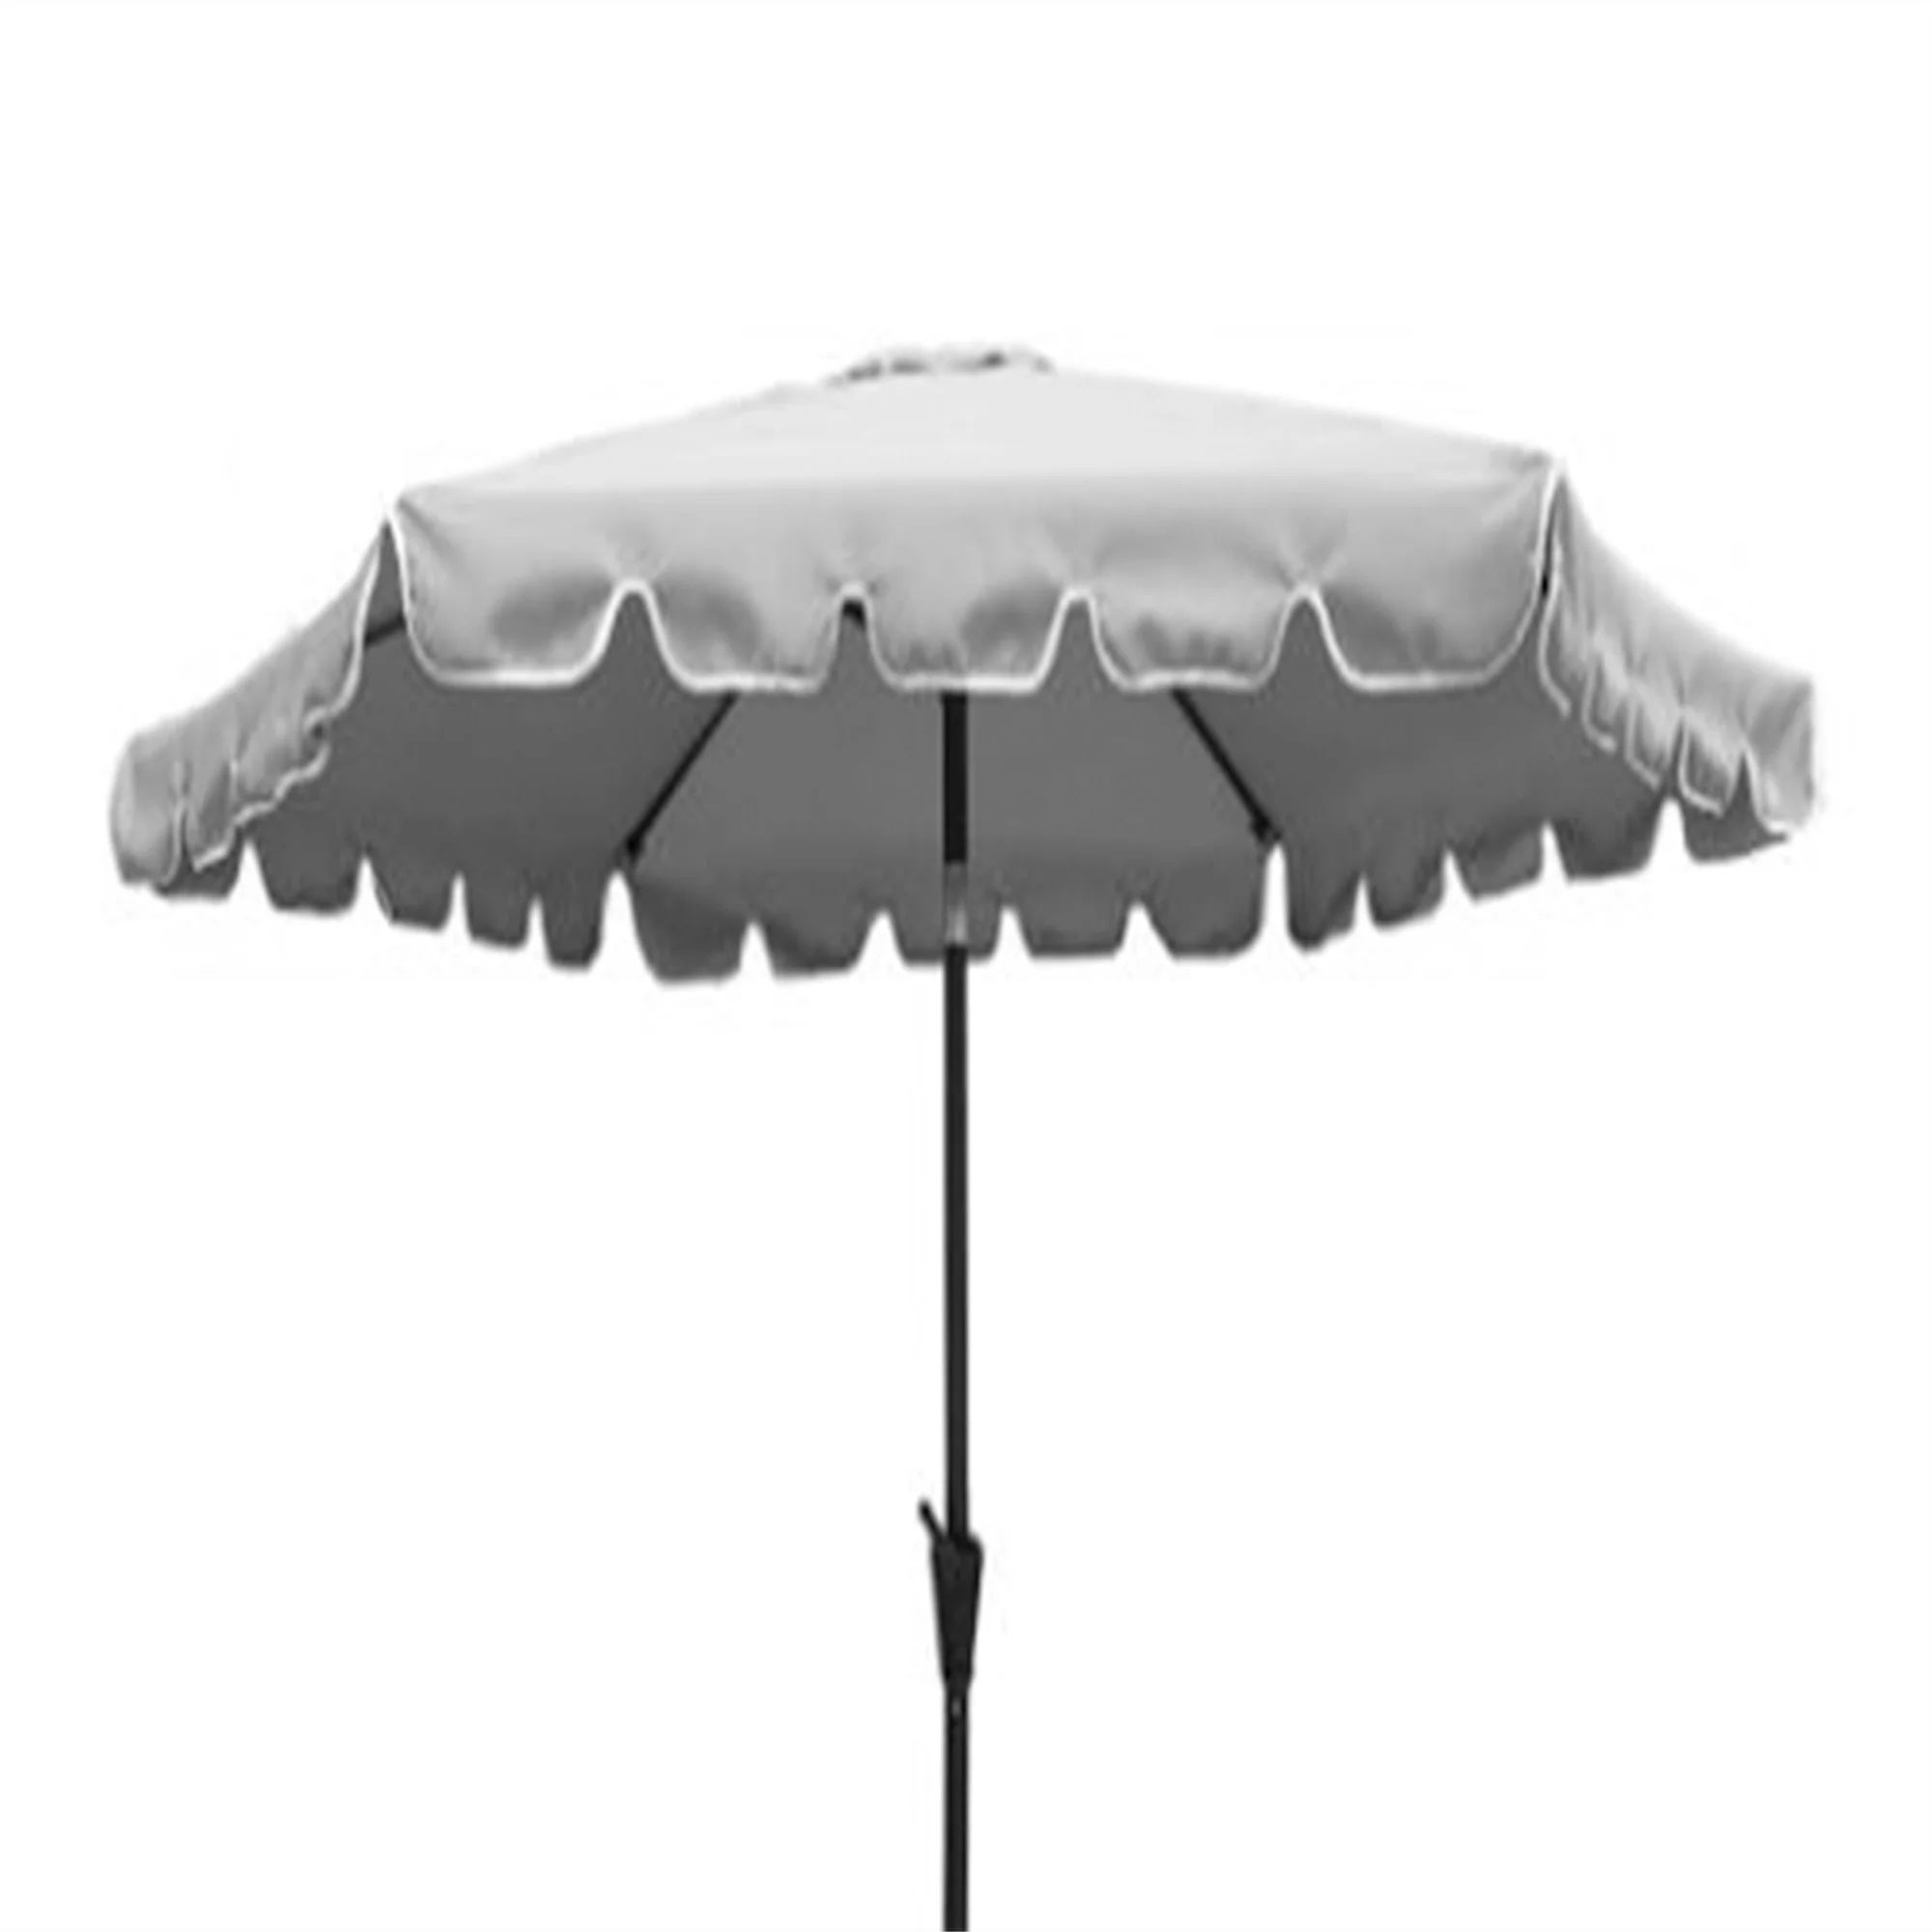 Cfowne Pole Scalloped Umbrella with Carry Bag, 9 Foot Tilting Outdoor Market Umbrella for Pool De... | Walmart (US)